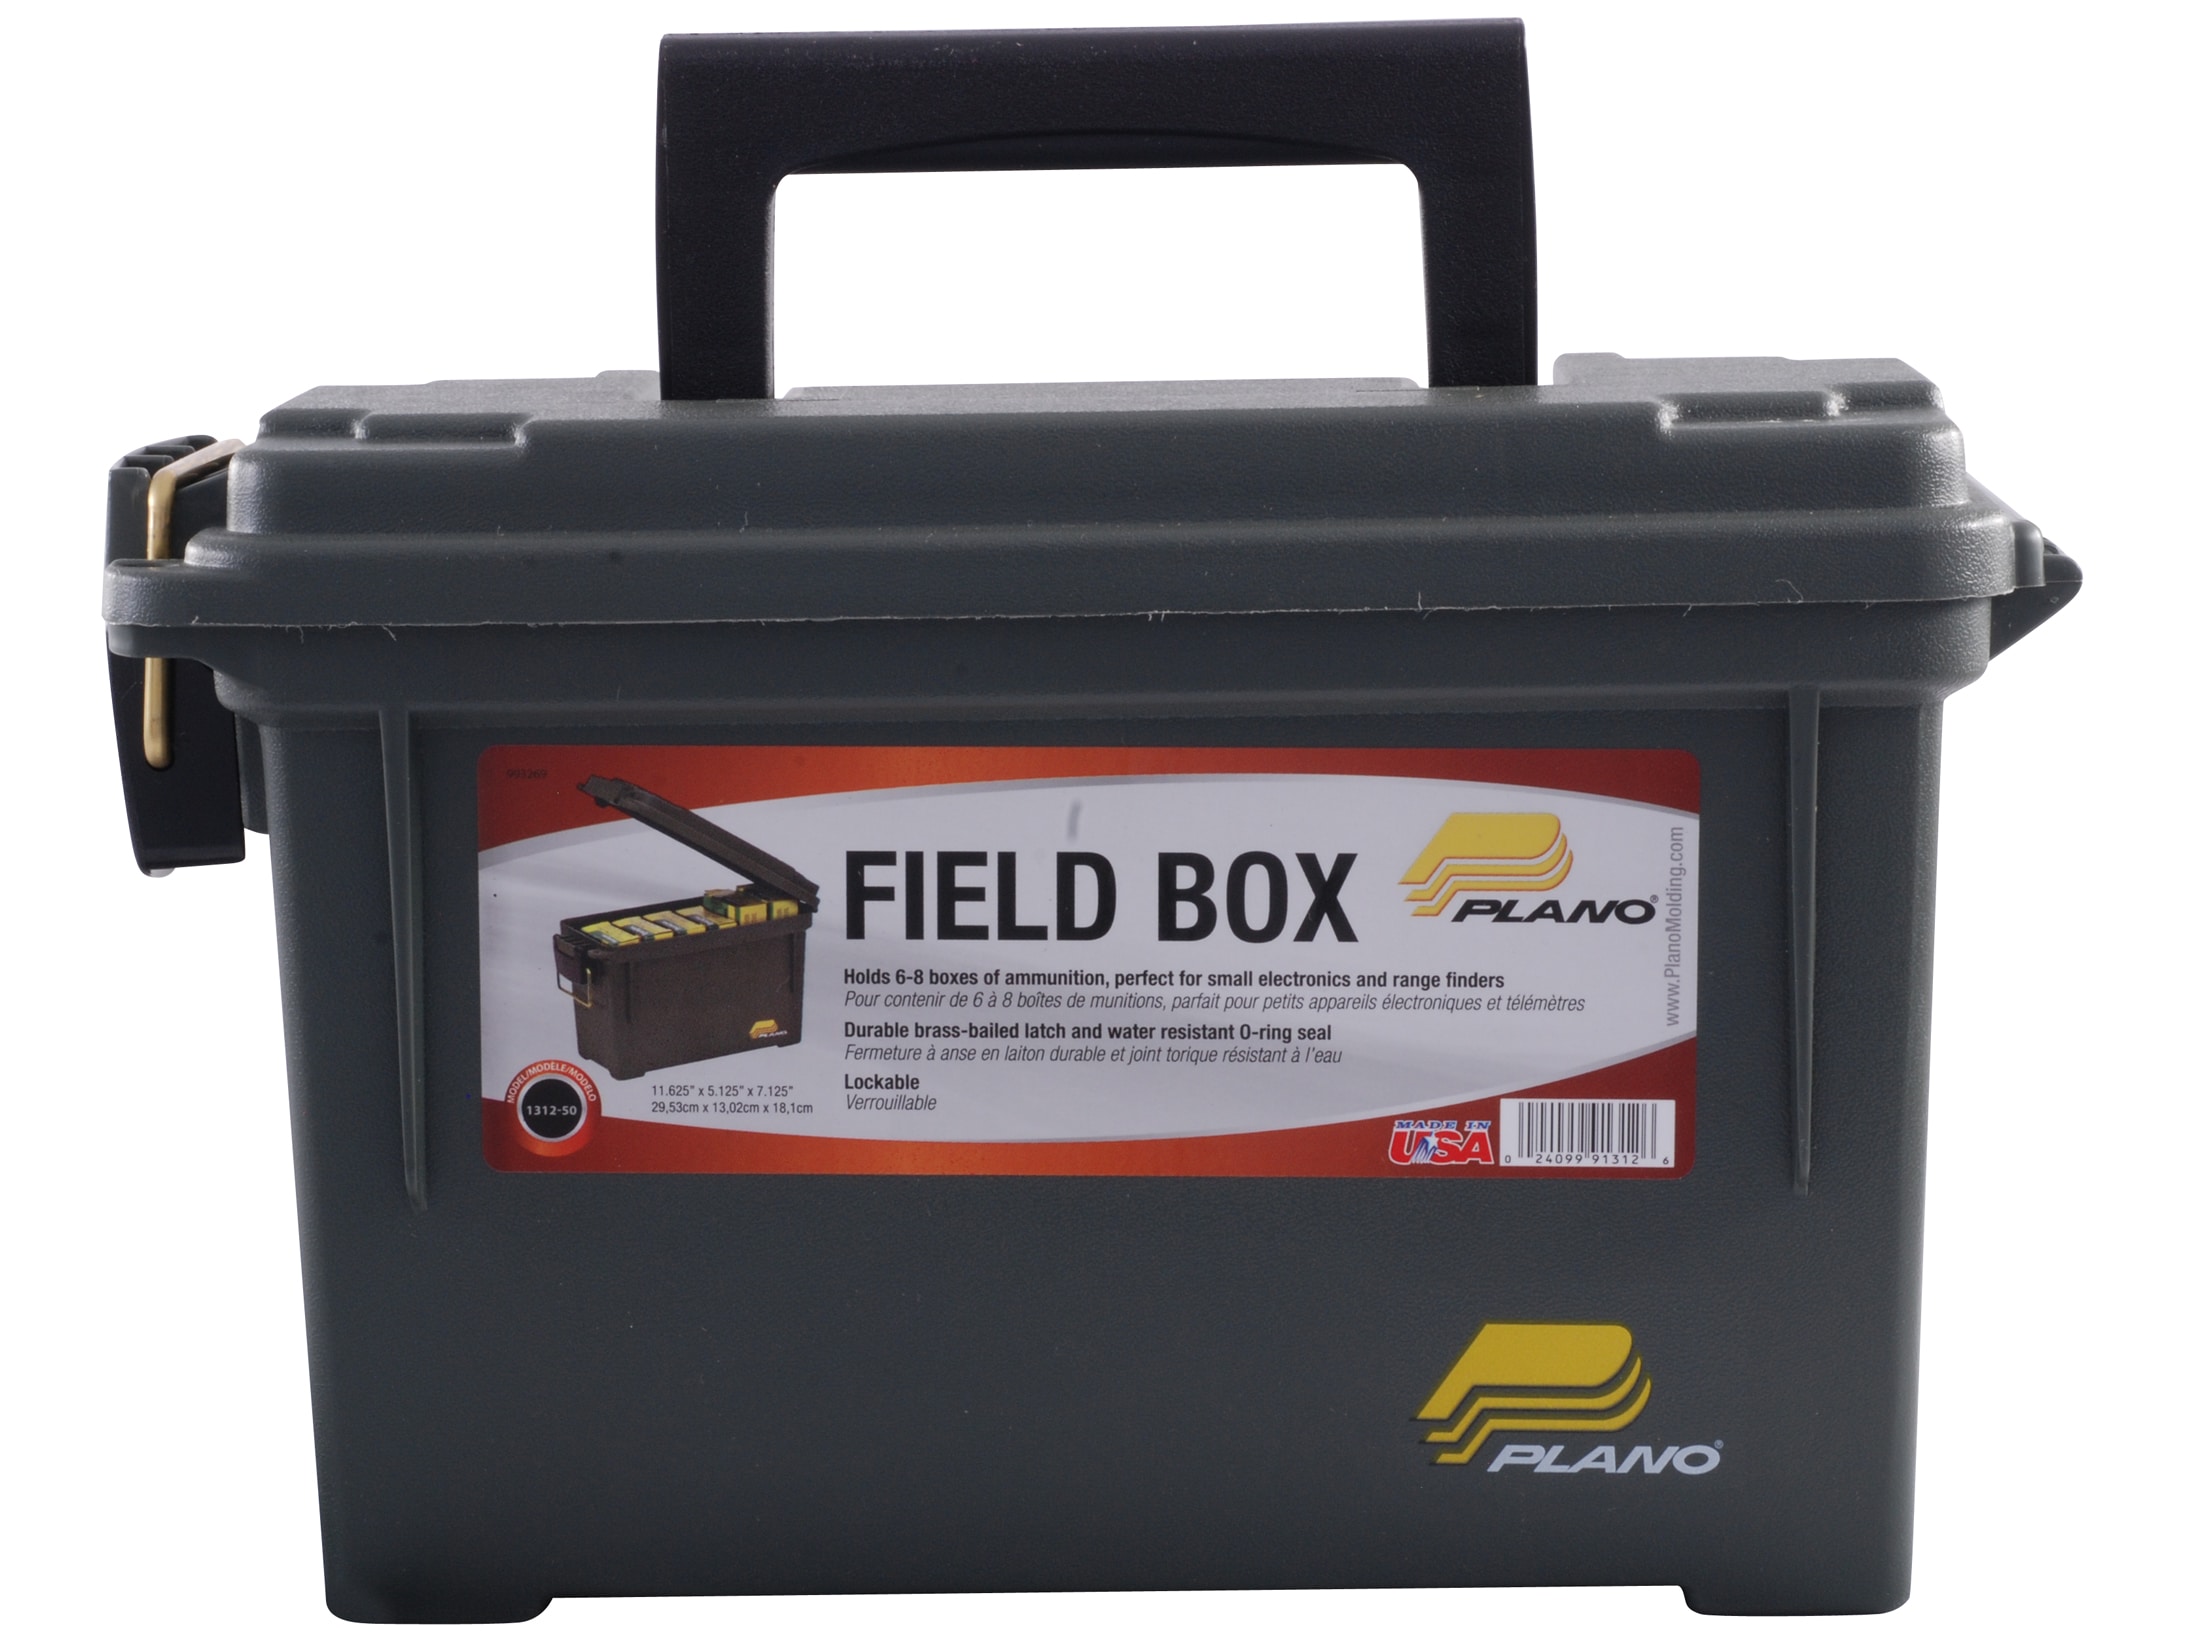 Plano Field Box - A Basic Field/Ammo Box With Many Uses 